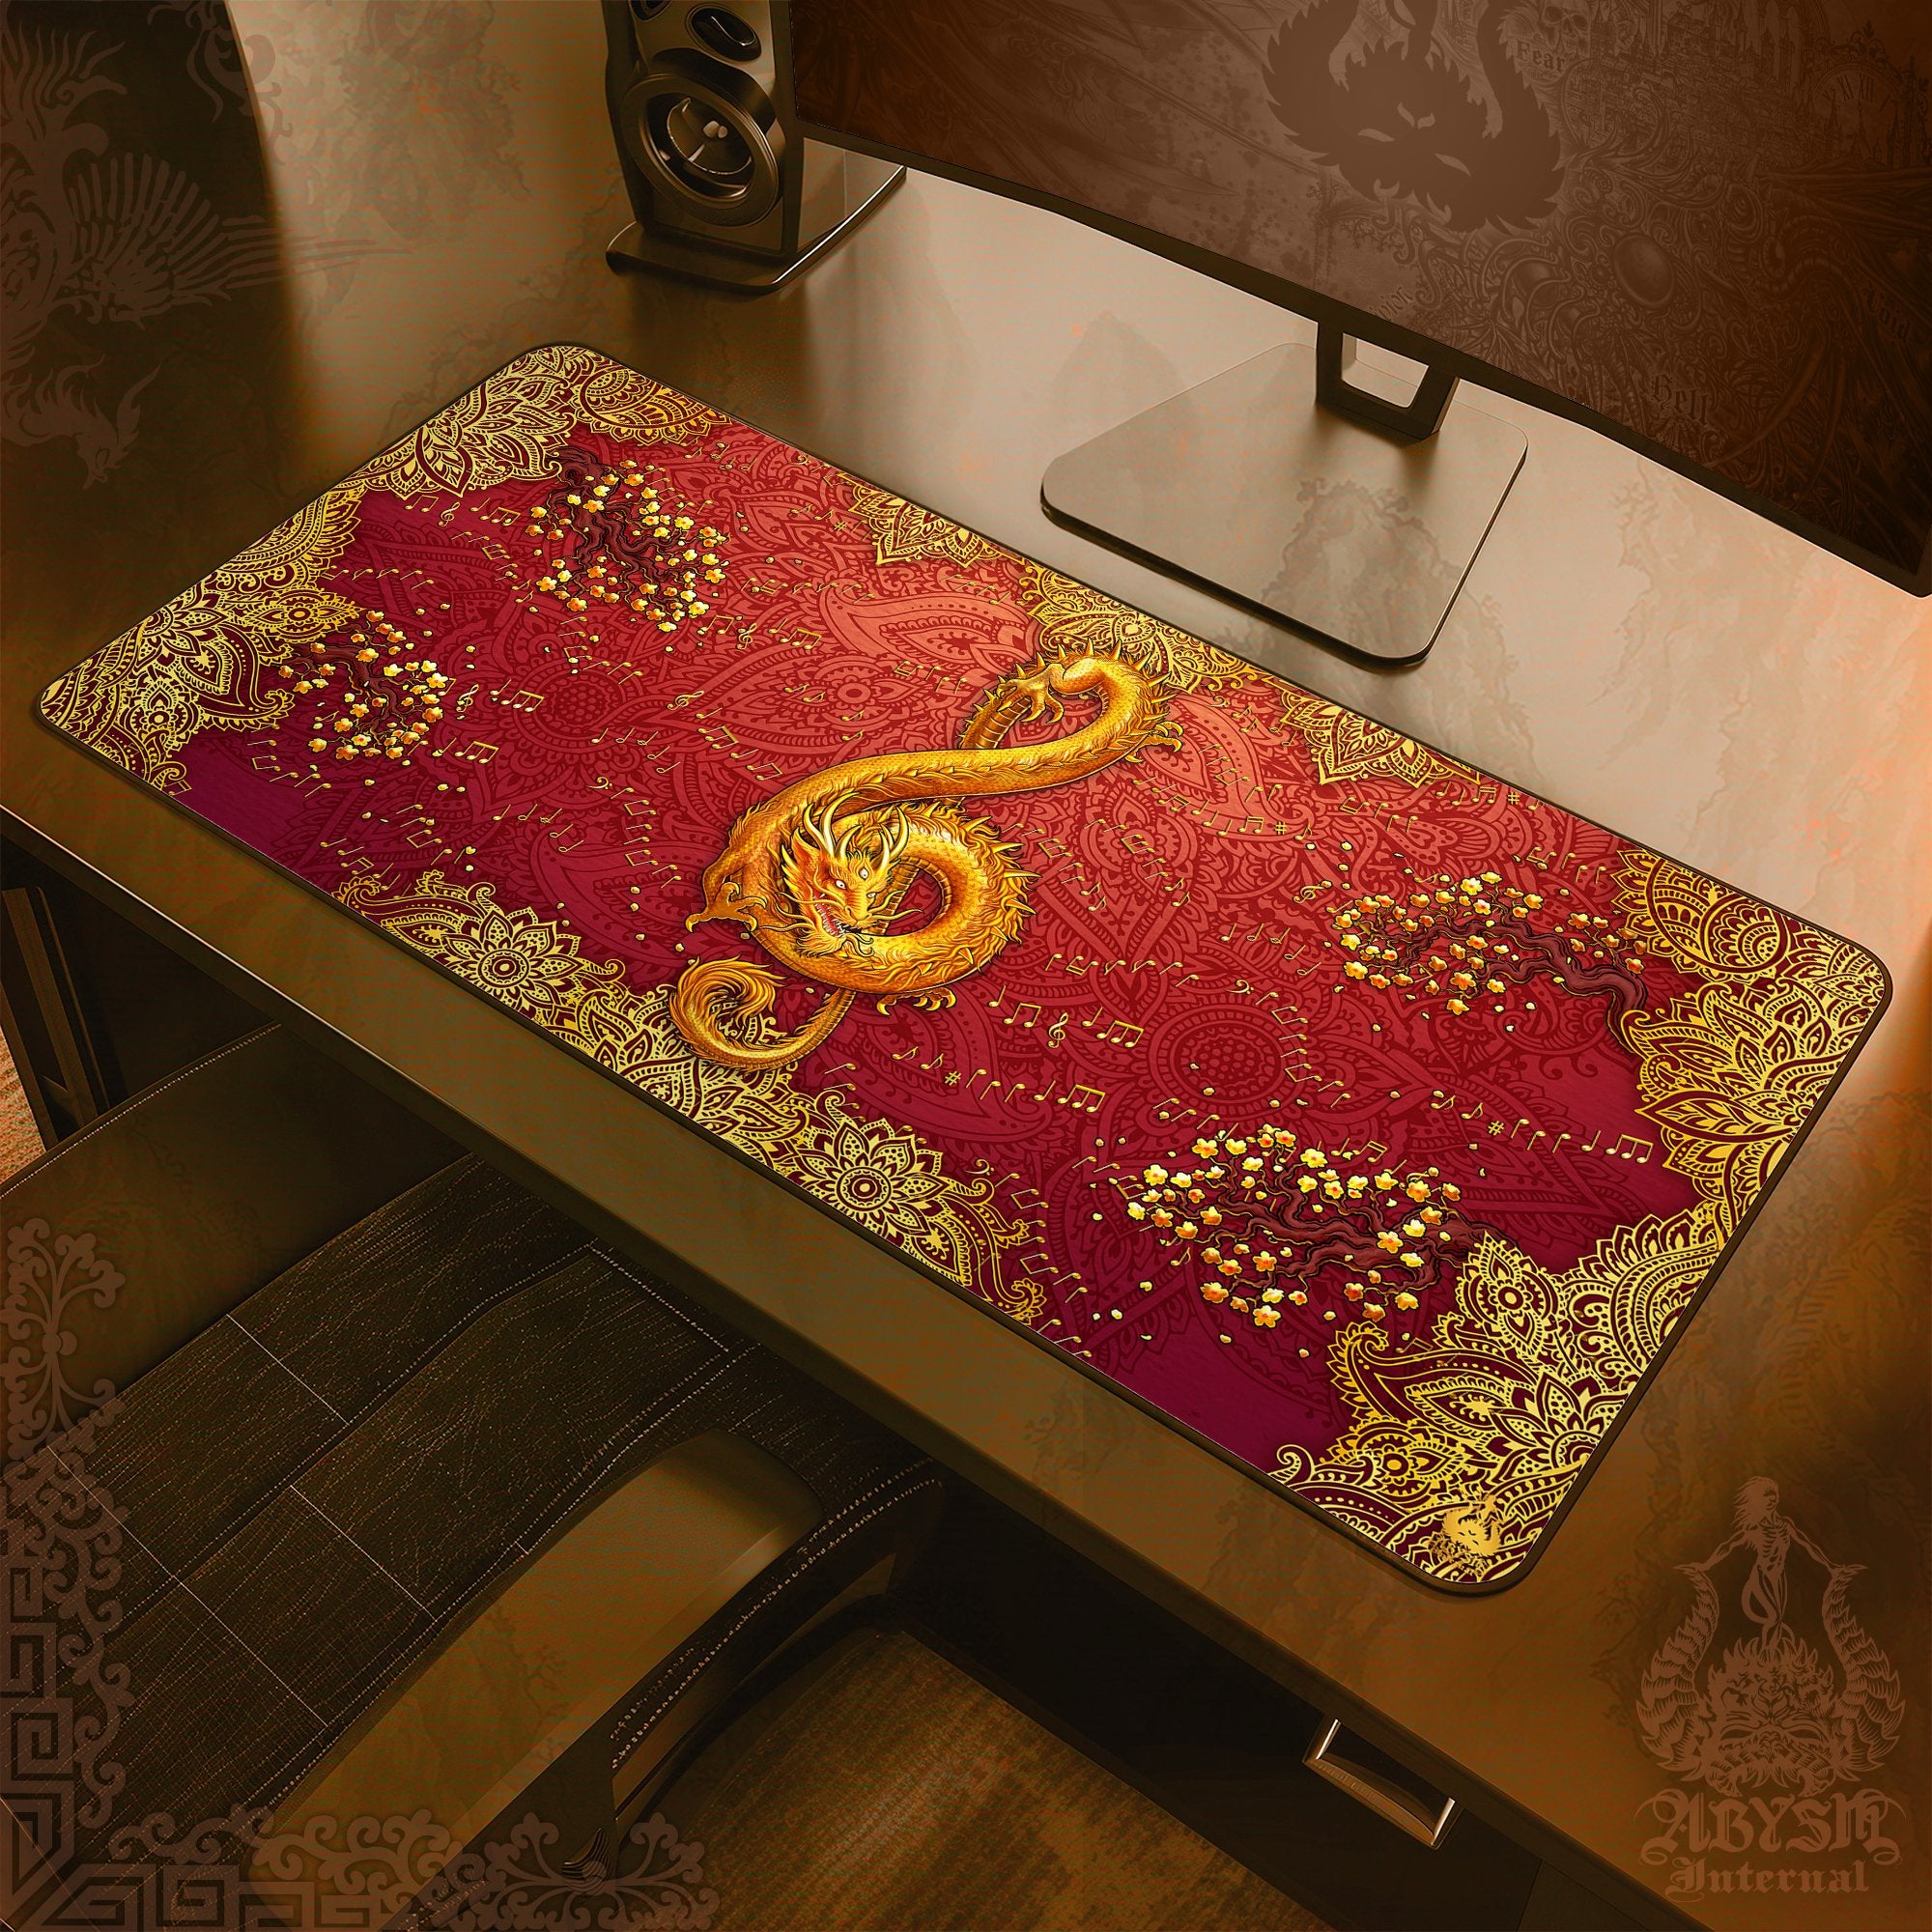 Boho Music Desk Mat, Dragon Gaming Mouse Pad, Asian Table Protector Cover, Indie Workpad, Treble Clef Art Print - Mandalas - Abysm Internal